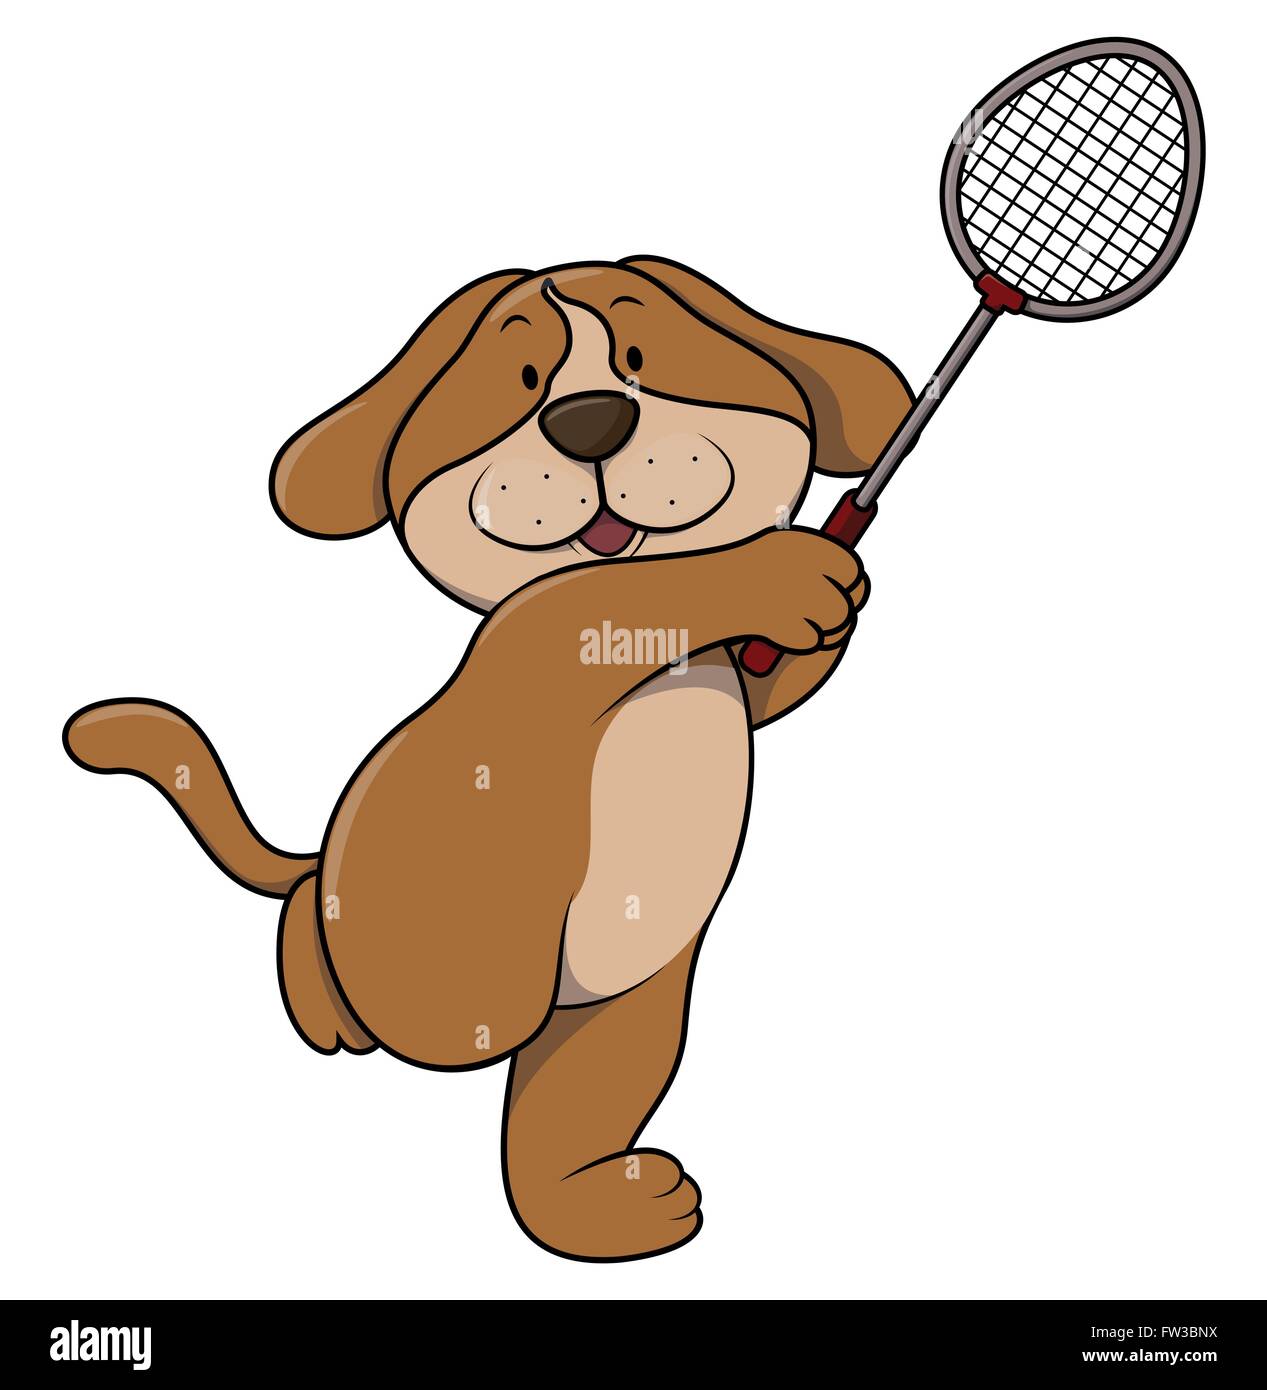 Tennis cartoon hi-res stock photography and images - Alamy